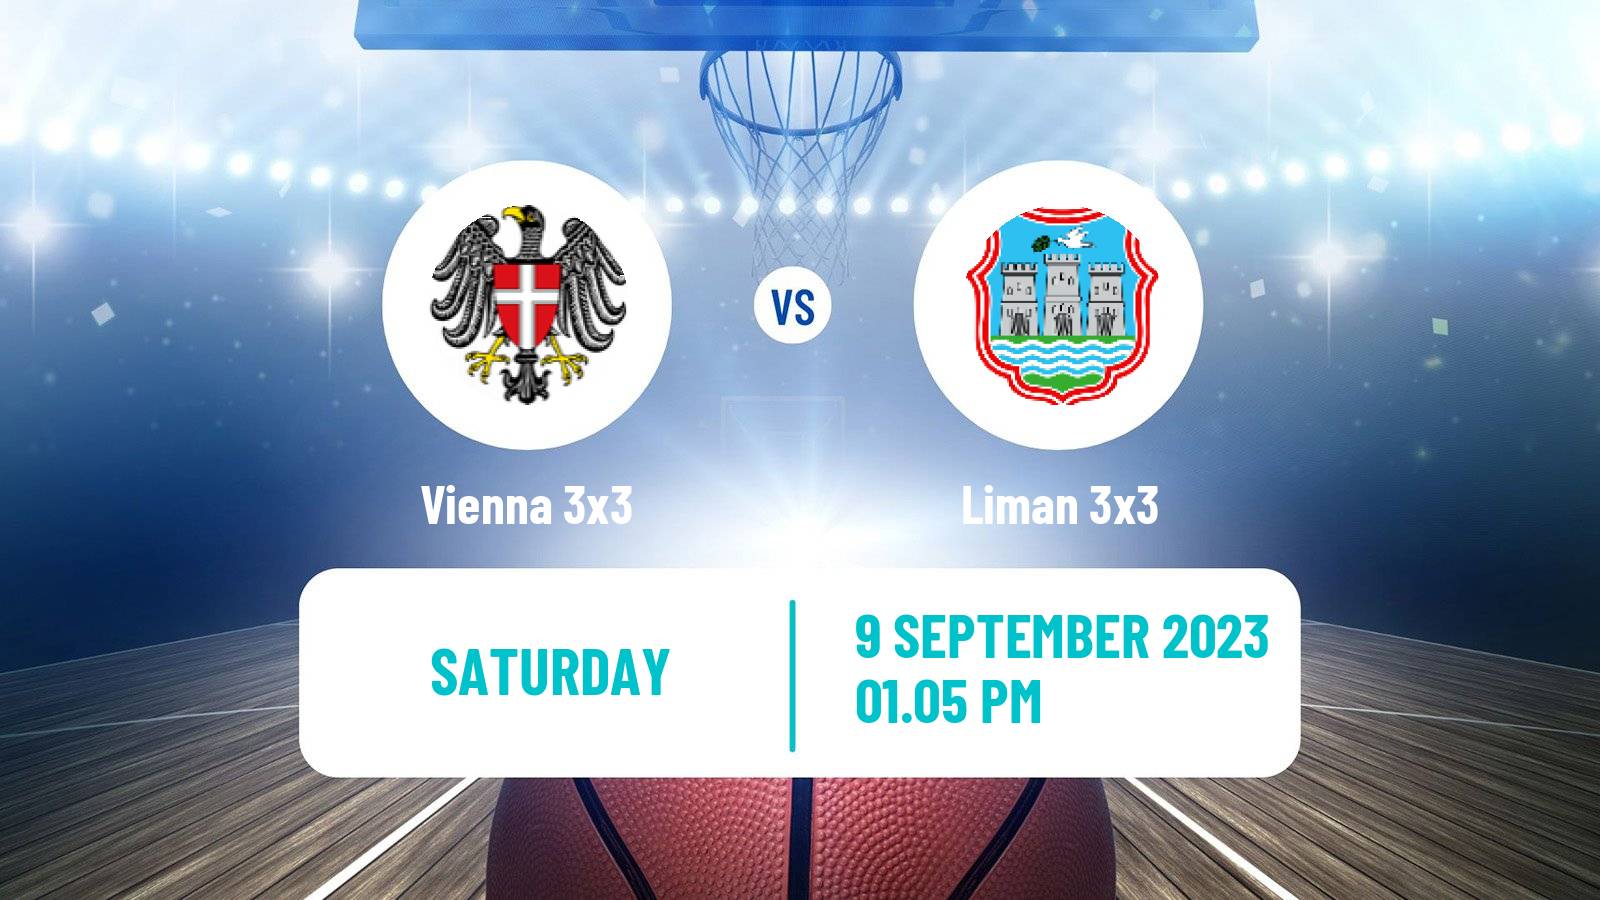 Basketball World Tour Constanta 3x3 Vienna 3x3 - Liman 3x3